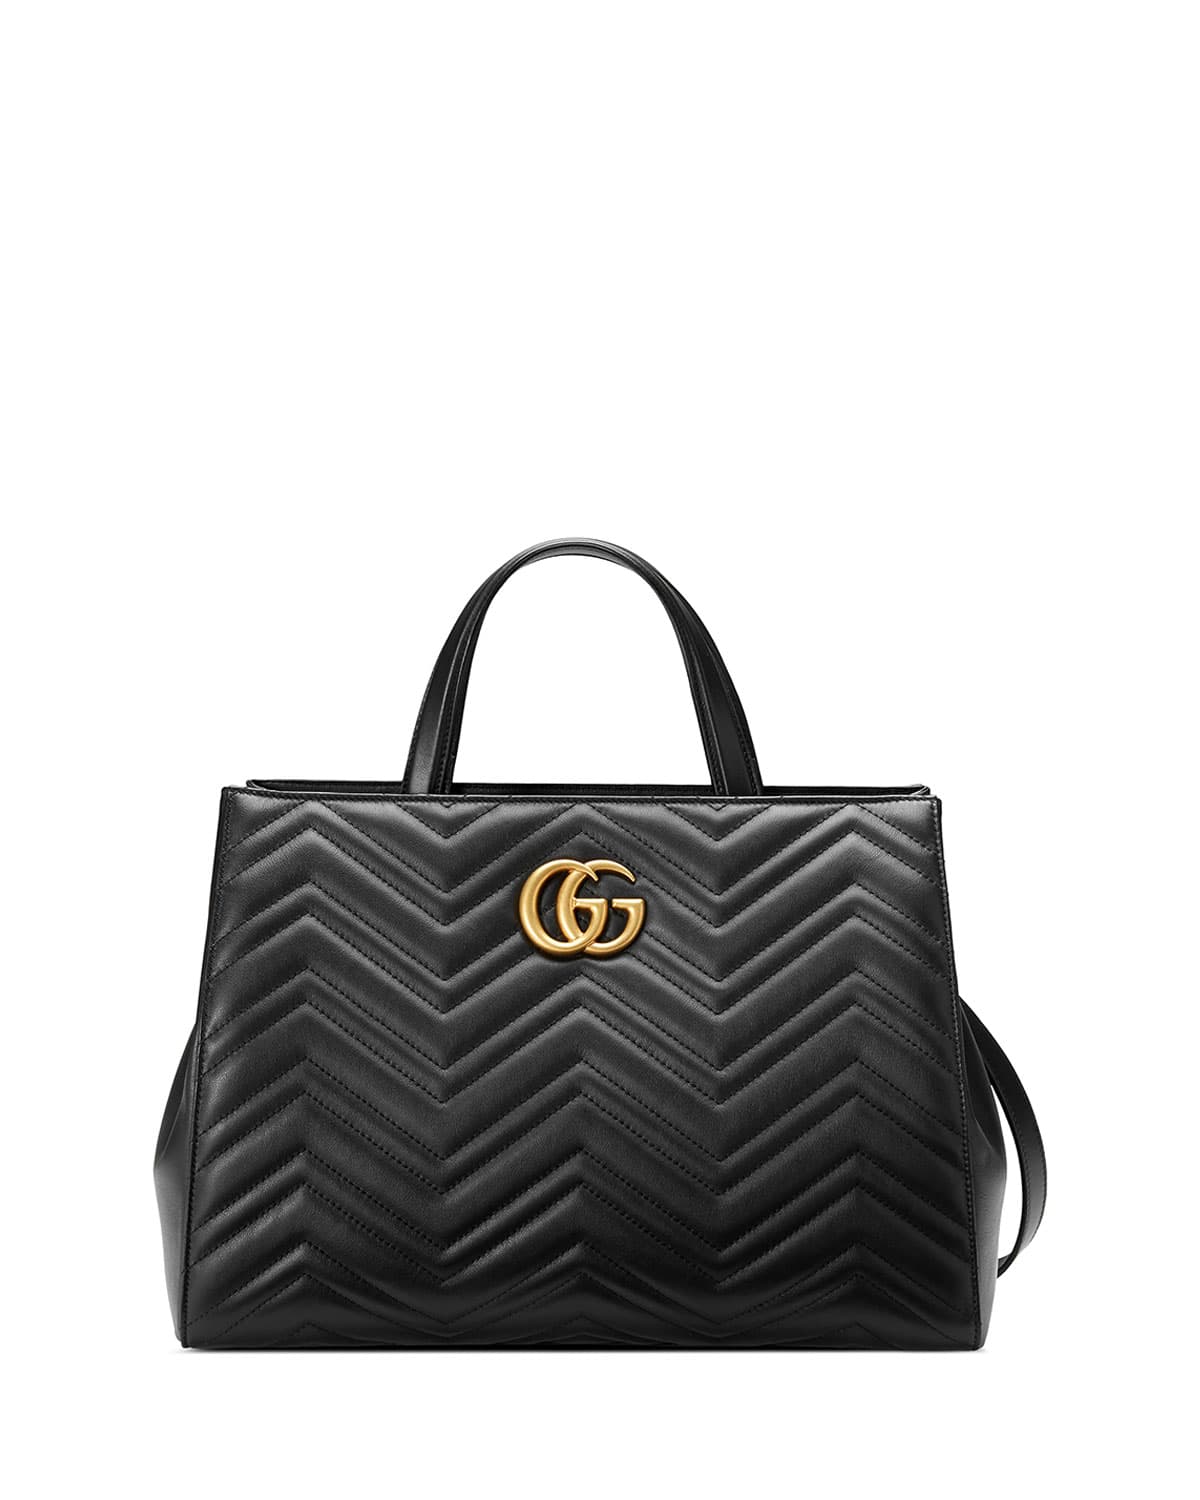 Gucci Tote Bag Price In India | IQS Executive